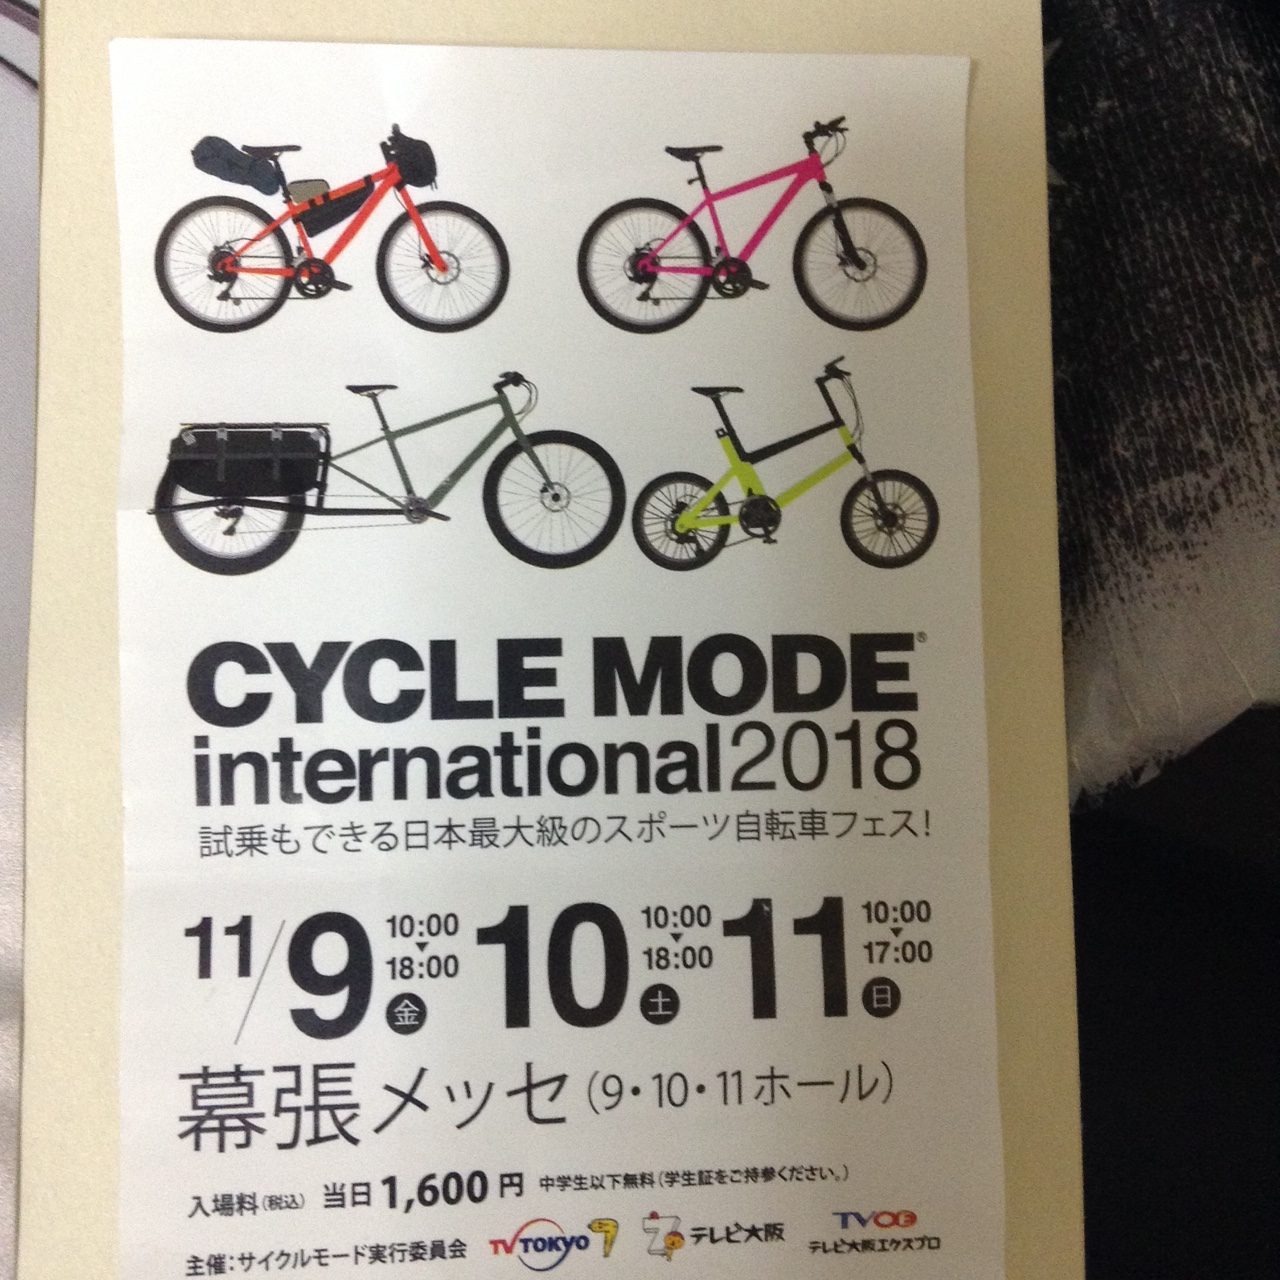 CYCLE MODE international 2018